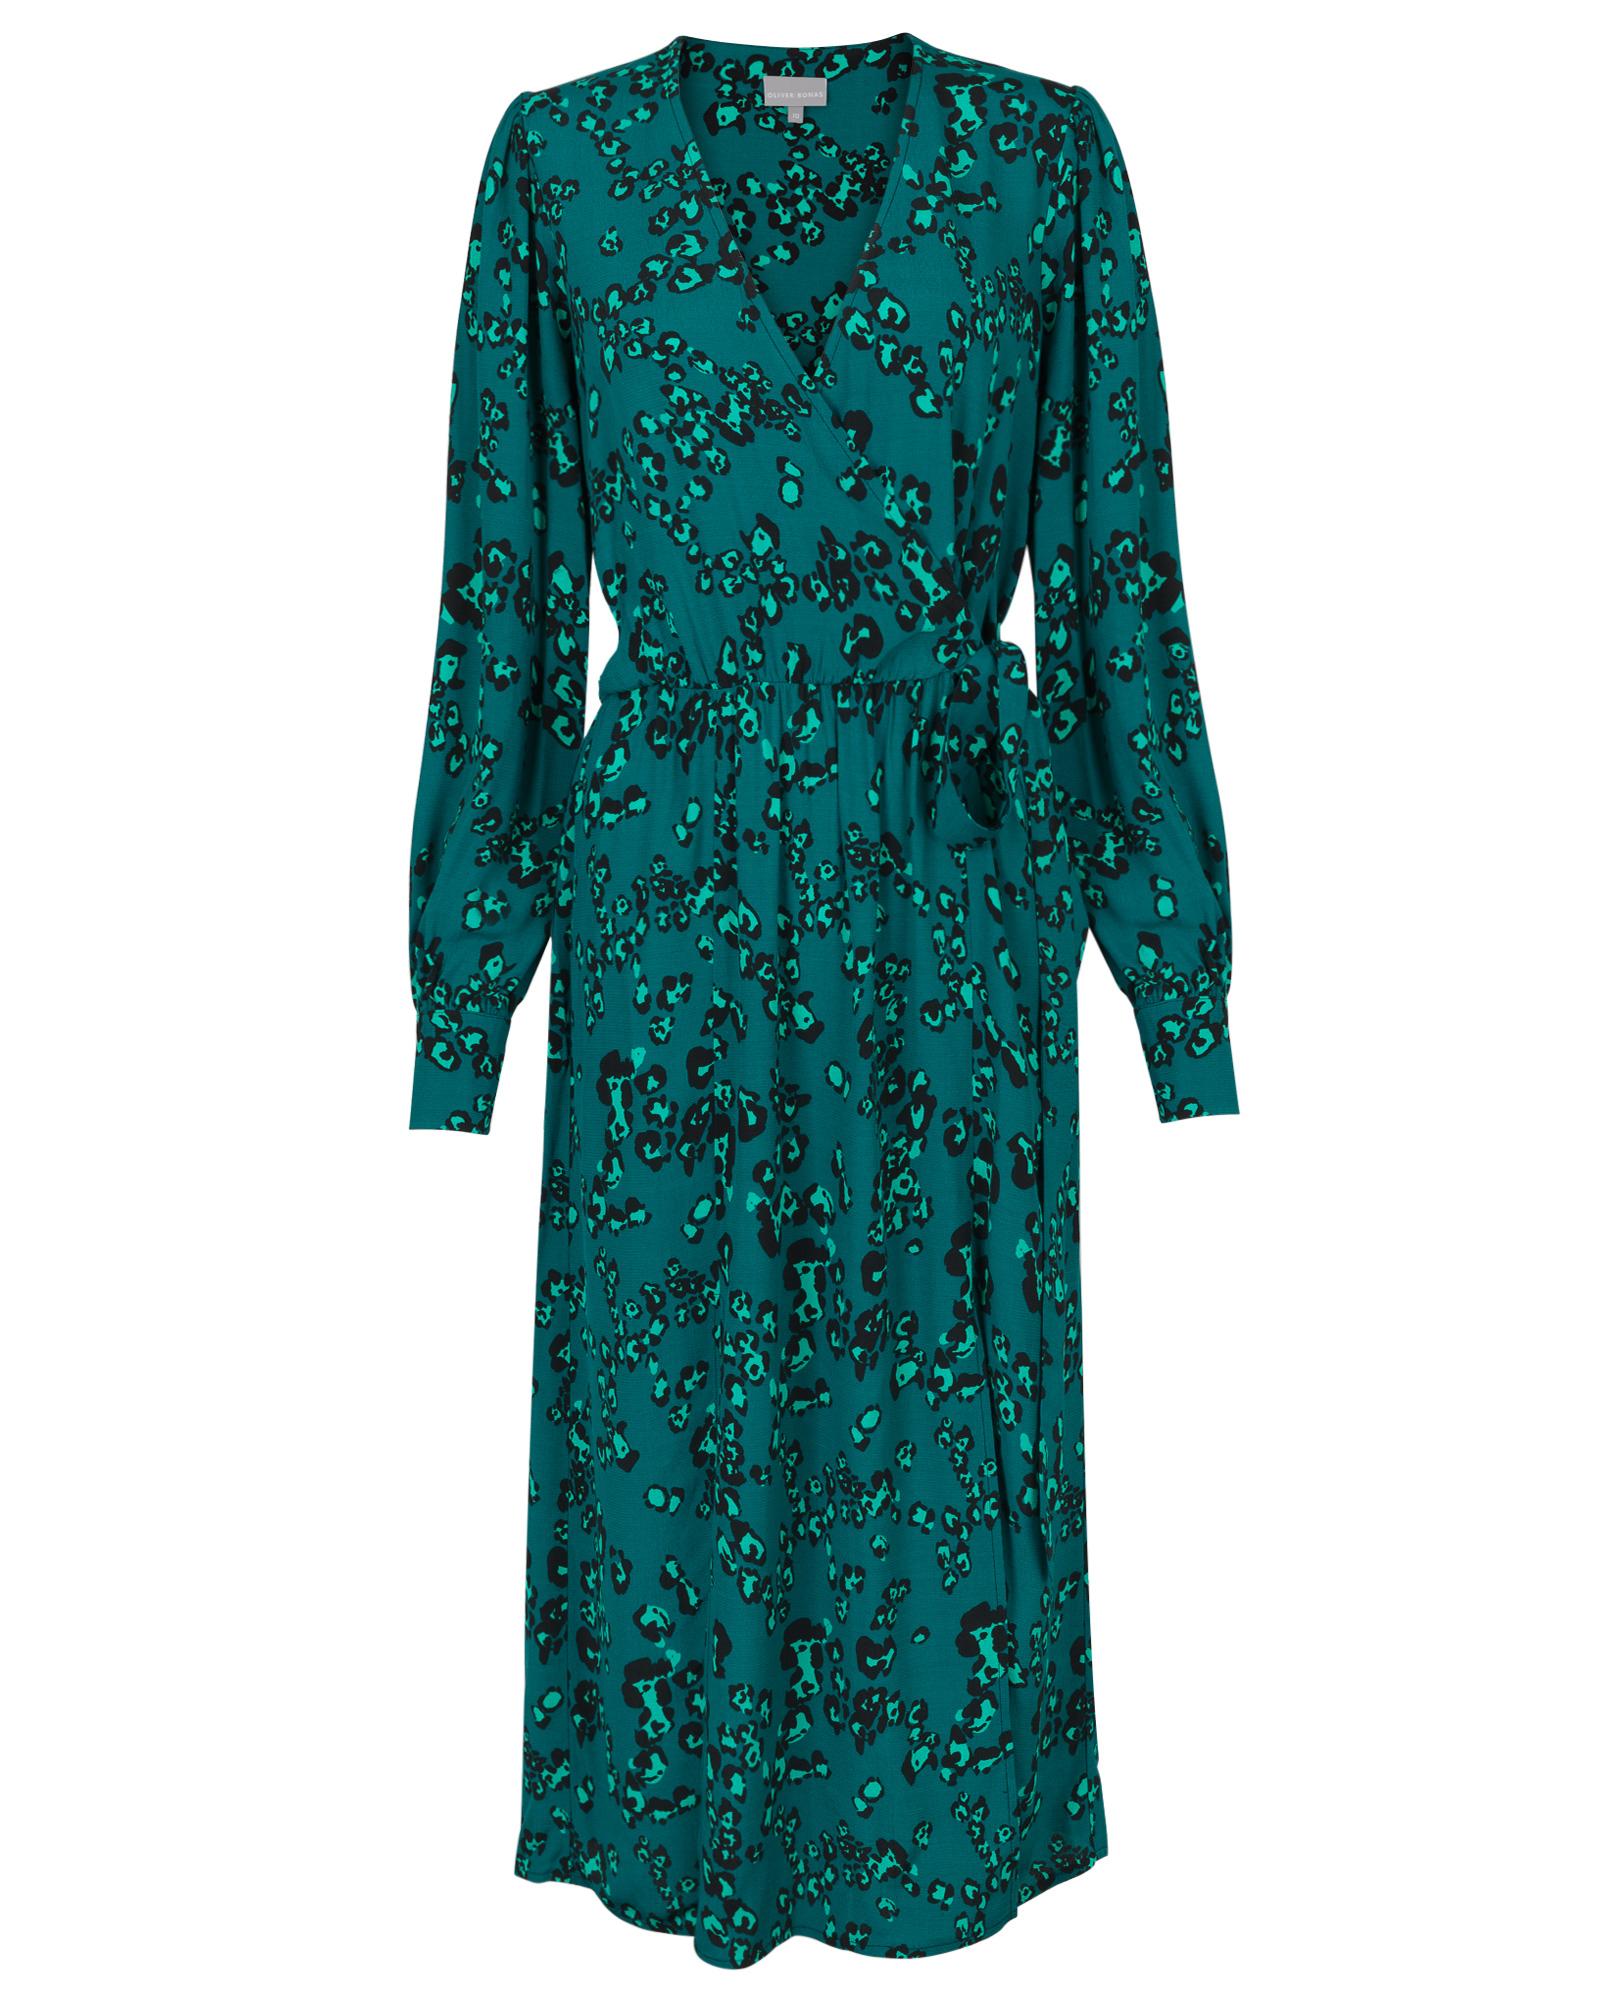 Oliver Bonas Teal Animal Print Midi Dress in Blue - Lyst